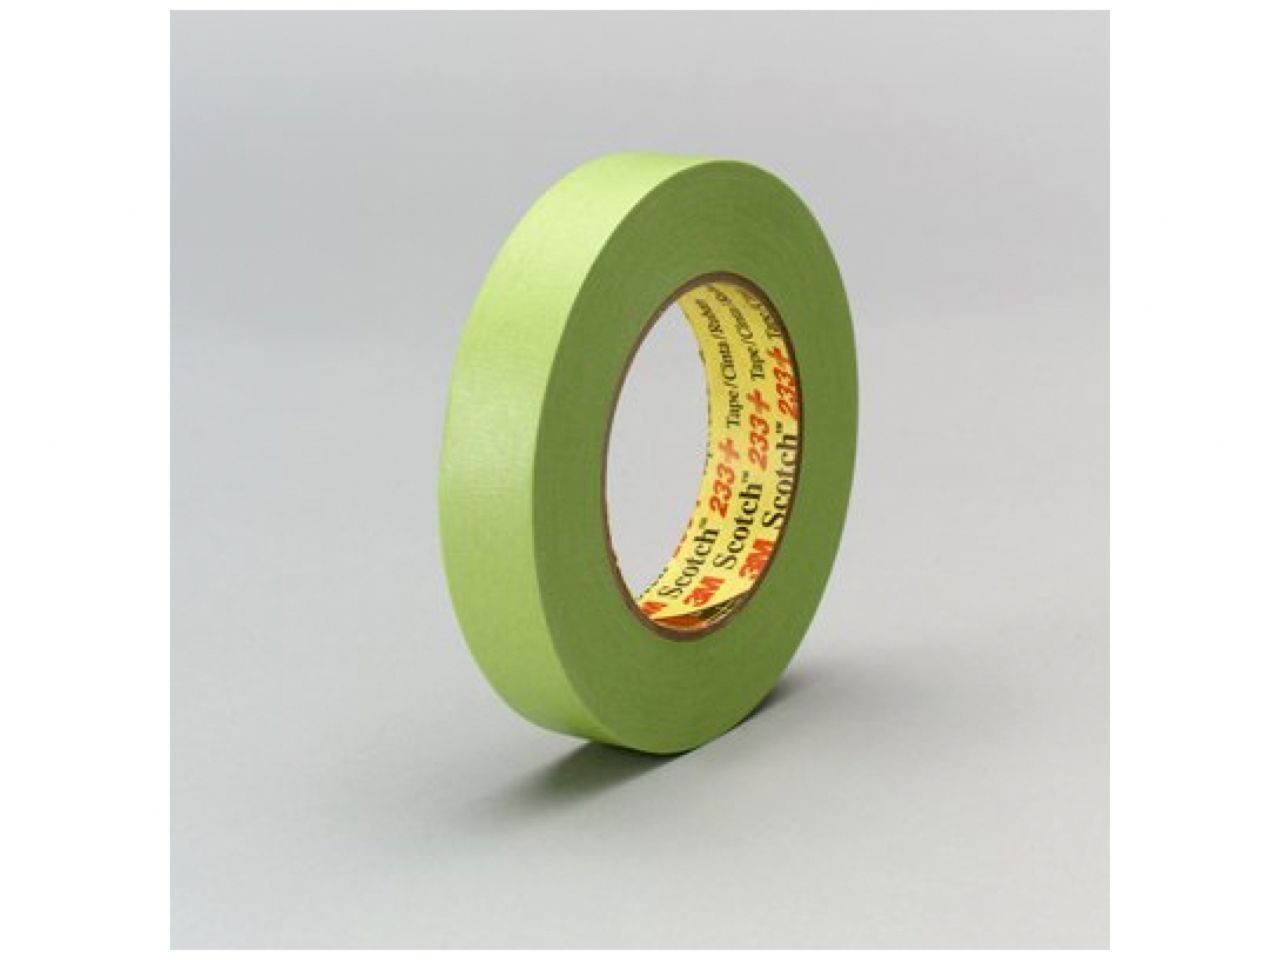 3M Performance Masking Tape 233+ 26340, 48 mm x 55 m, 12 rolls per case